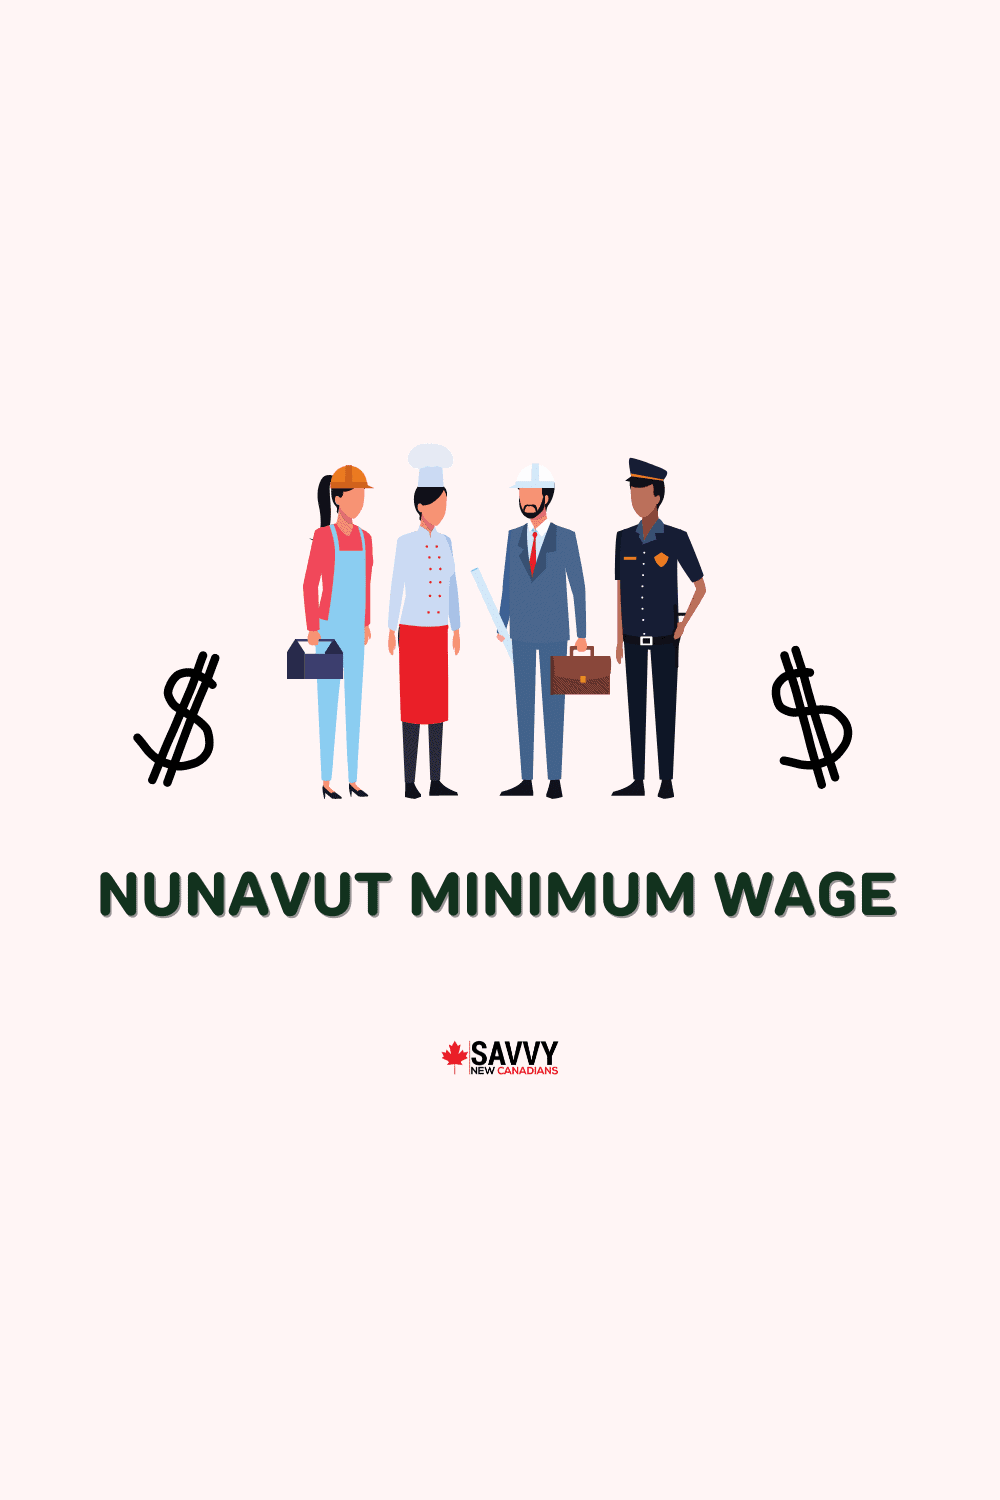 Nunavut Minimum Wage in 2022